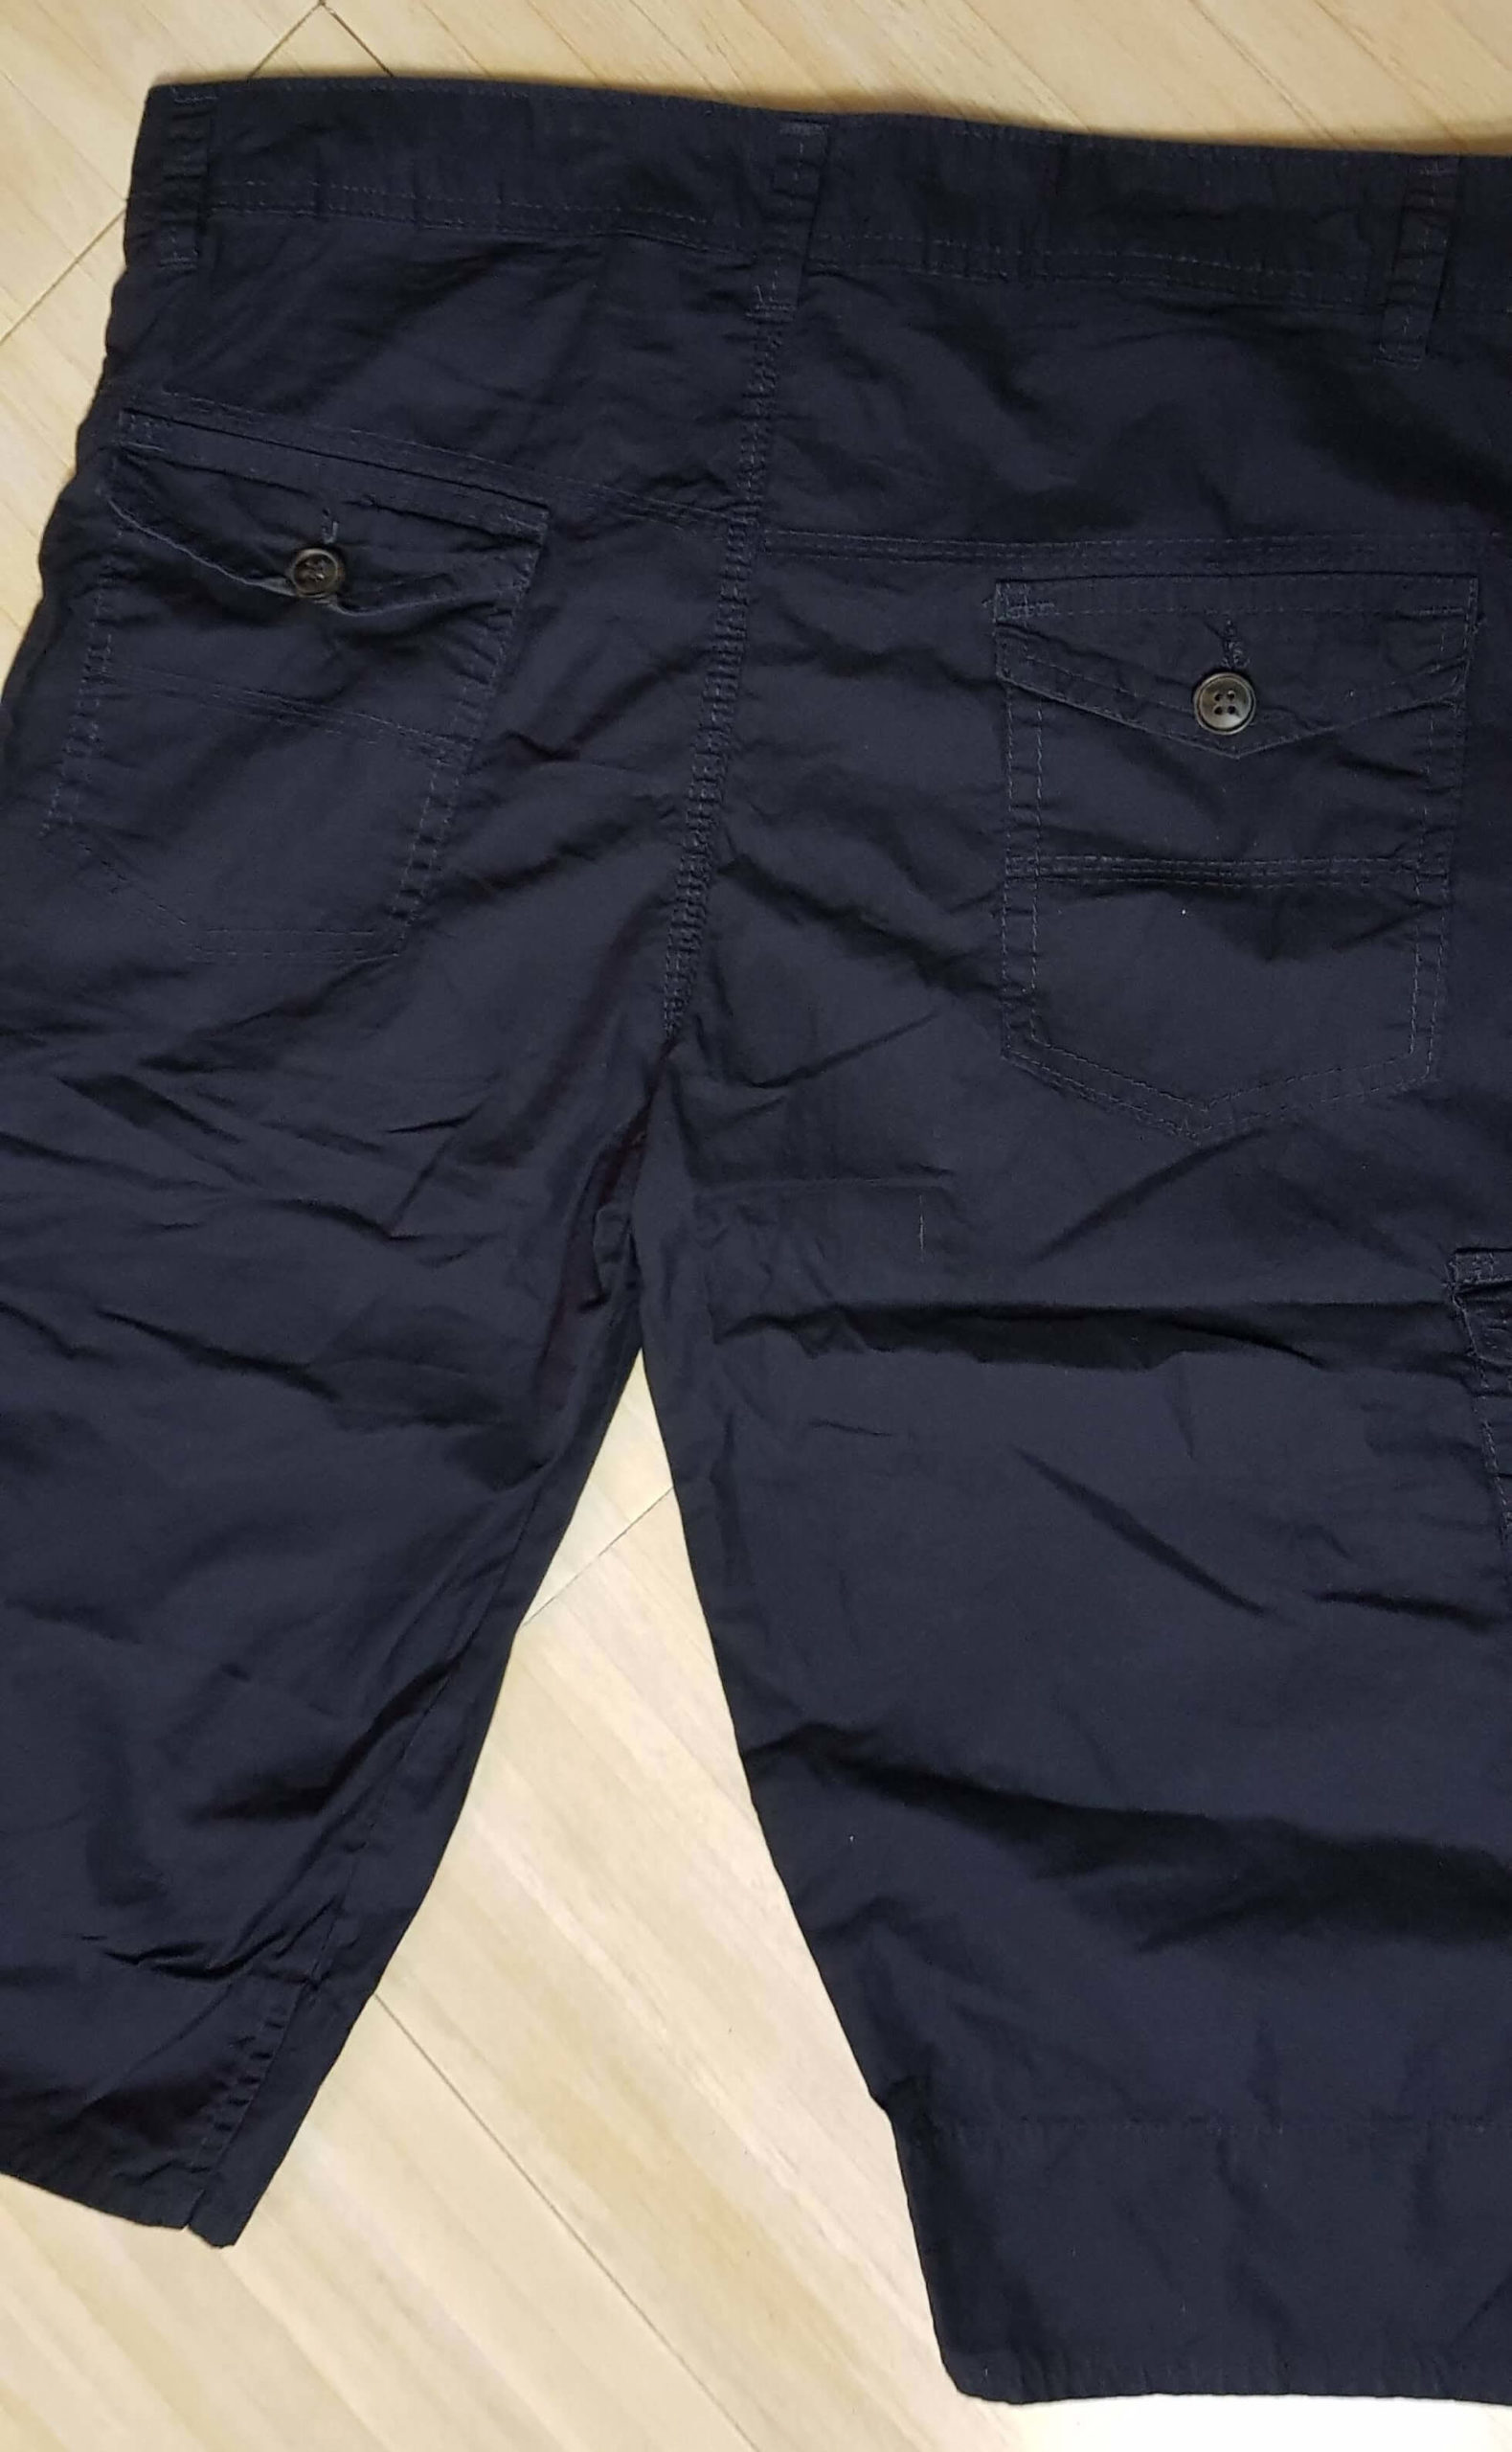 Solid Deep Navy Blue 3 Quarter Pant